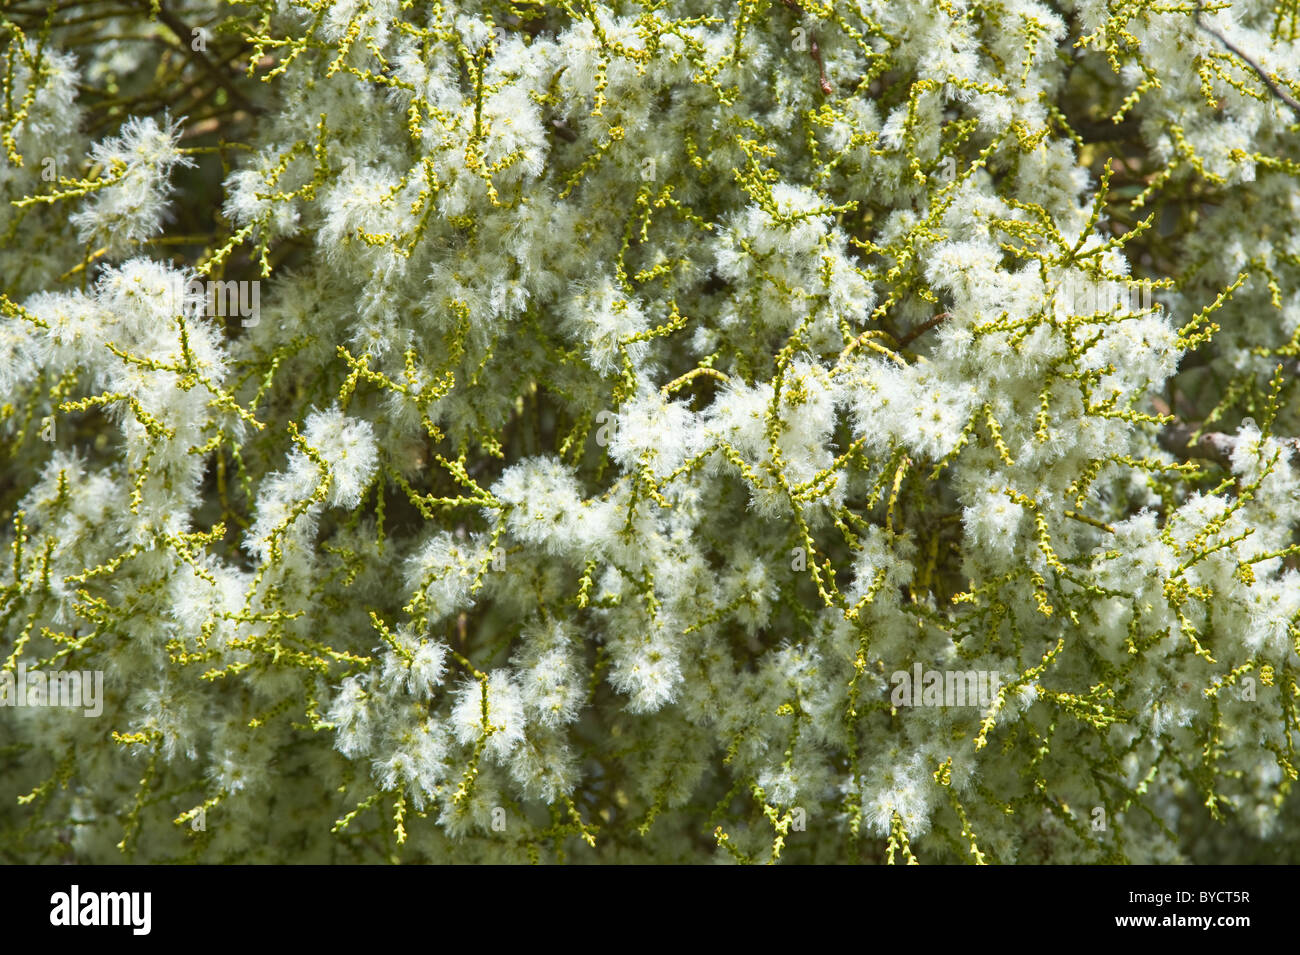 Farolito Chino, False mistletoe (Misodendrum punctulatum) grows and flowers on Nothofagus tree North of El Calafate Argentina Stock Photo